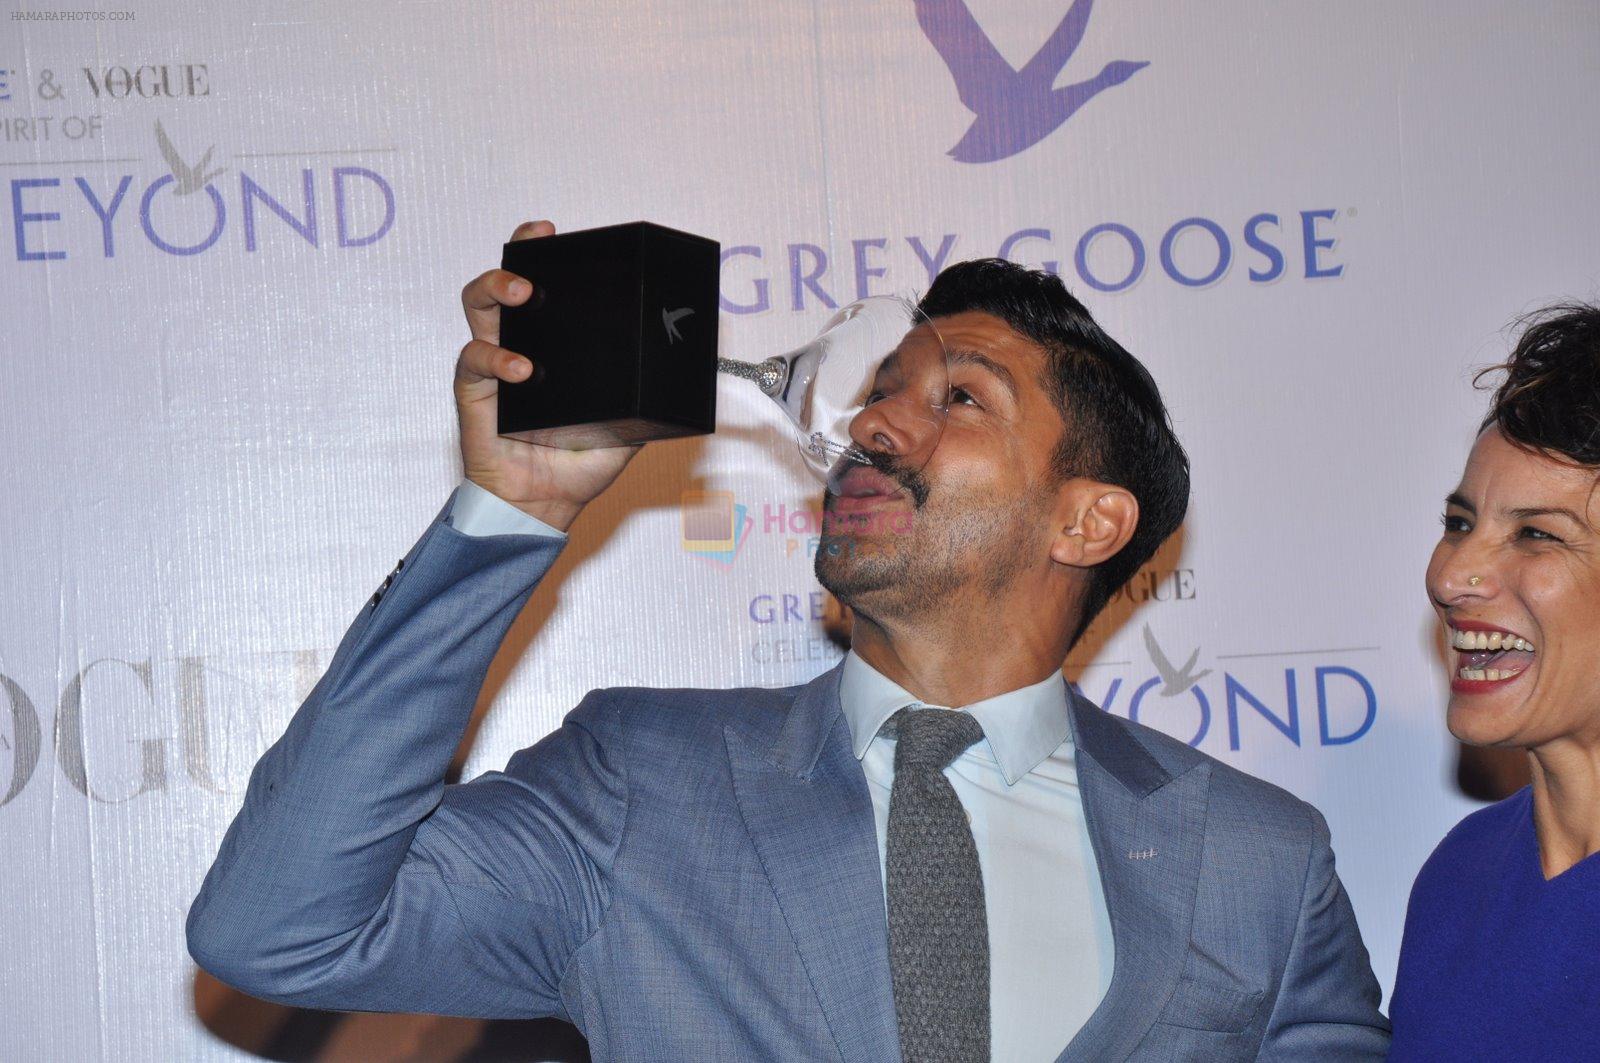 Farhan Akhtar, Adhuna Akhtar at Grey Goose India Fly Beyond Awards in Grand Hyatt, Mumbai on 16th Nov 2014